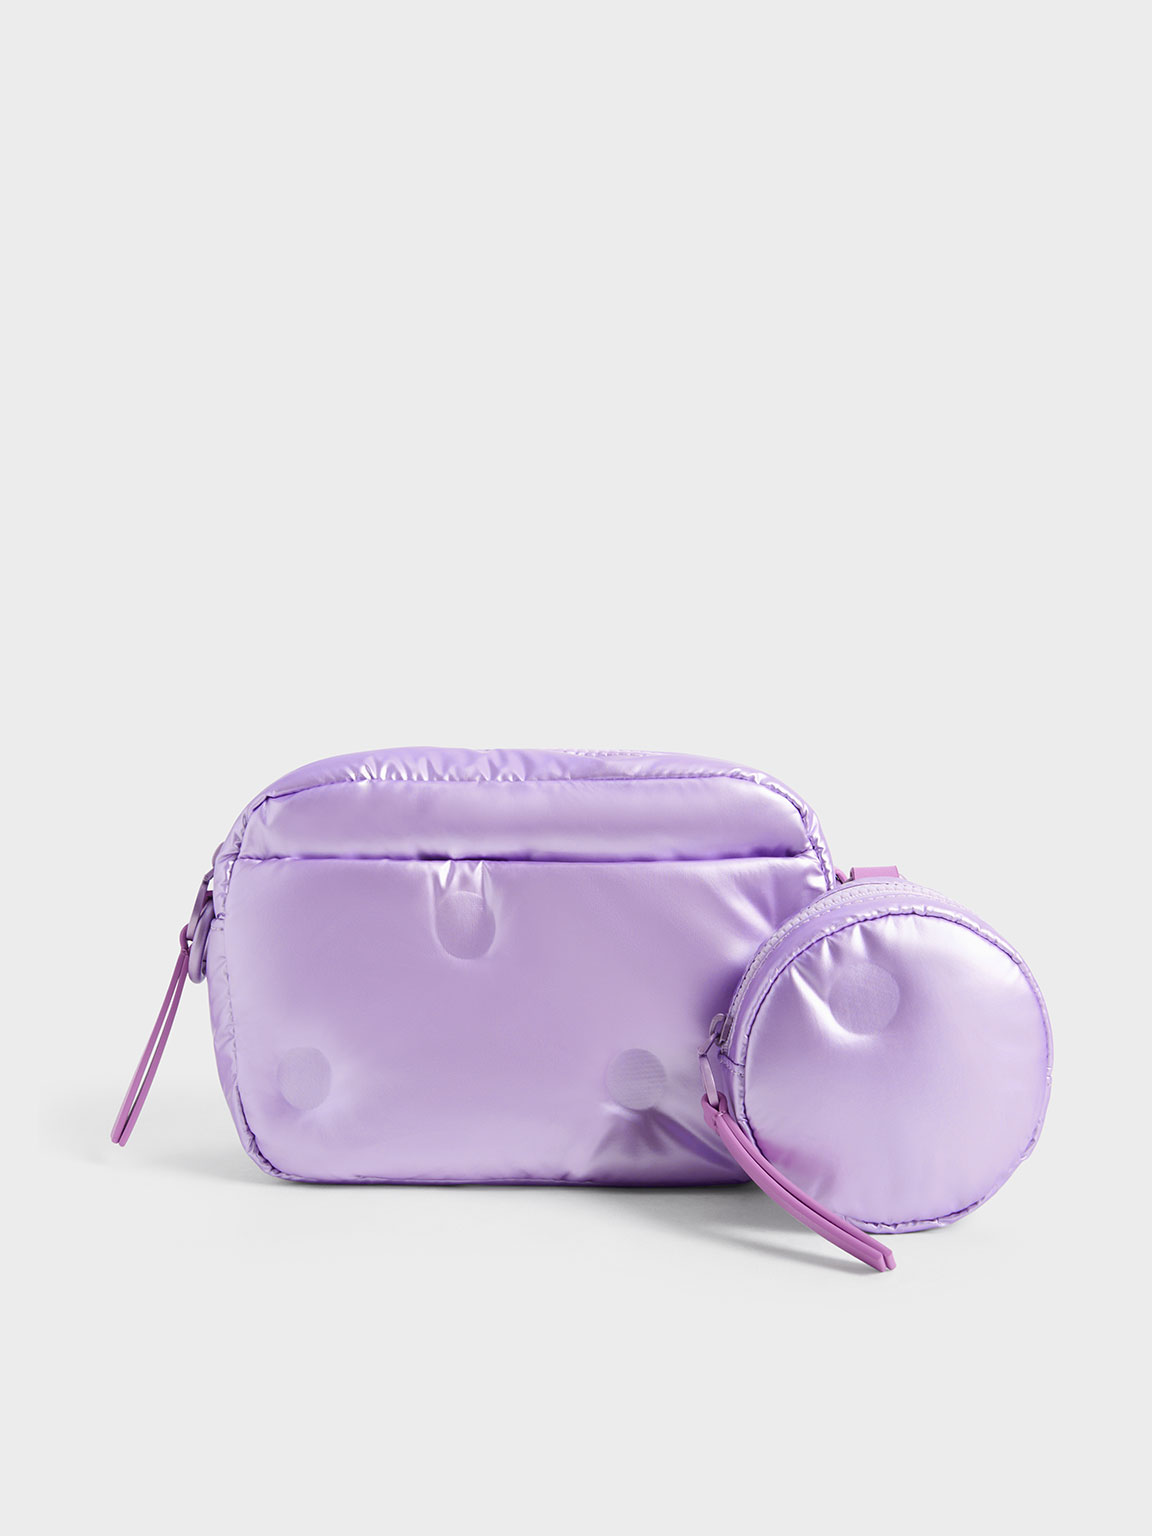 Charles & Keith Sianna Nylon Boxy Bag In Violet